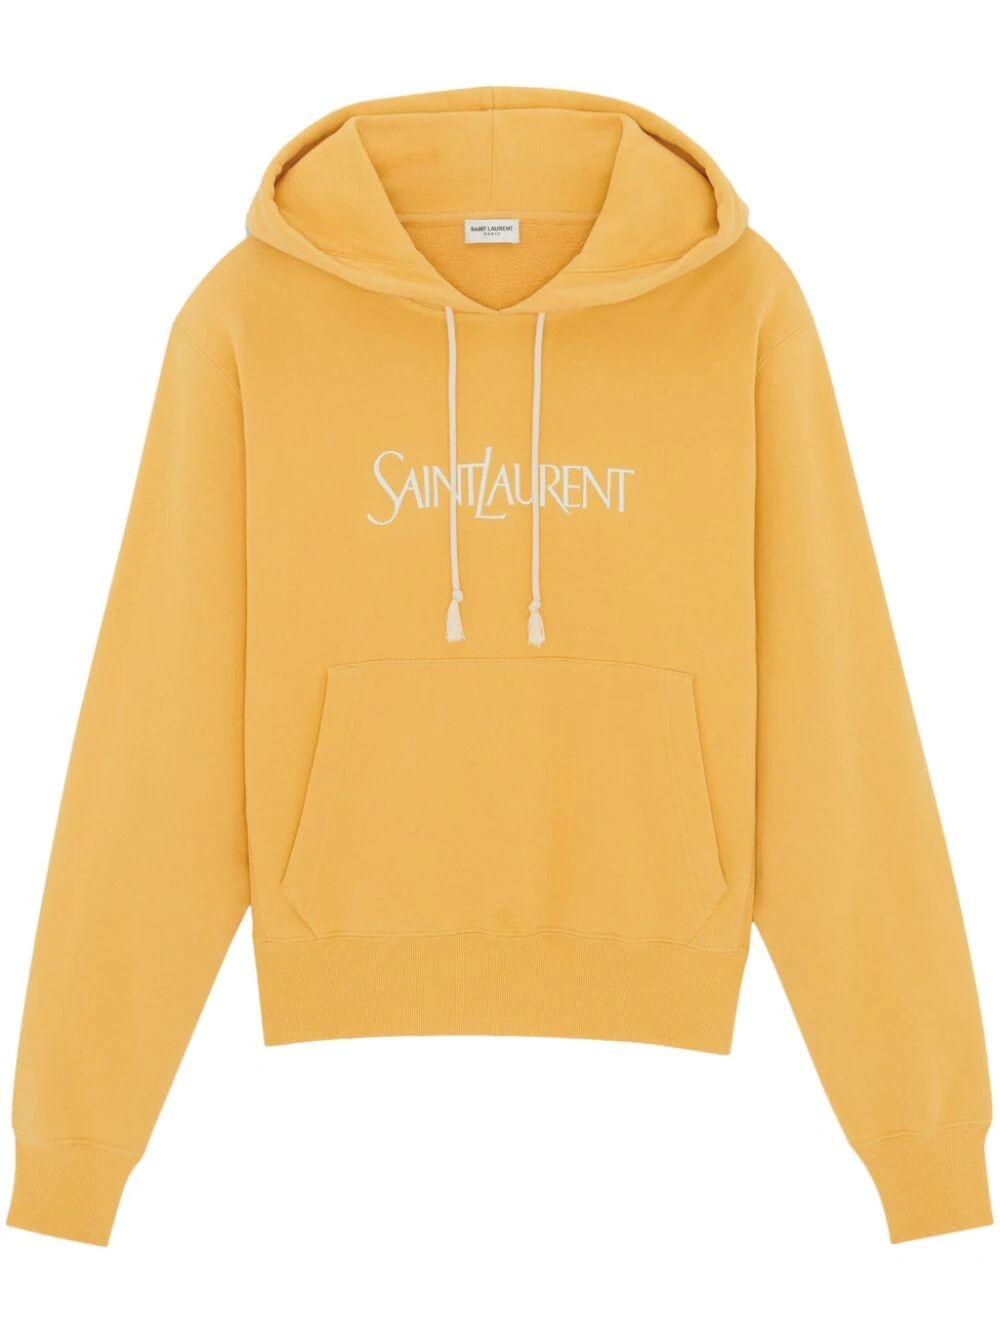 Saint laurent oversized hoodie - 1